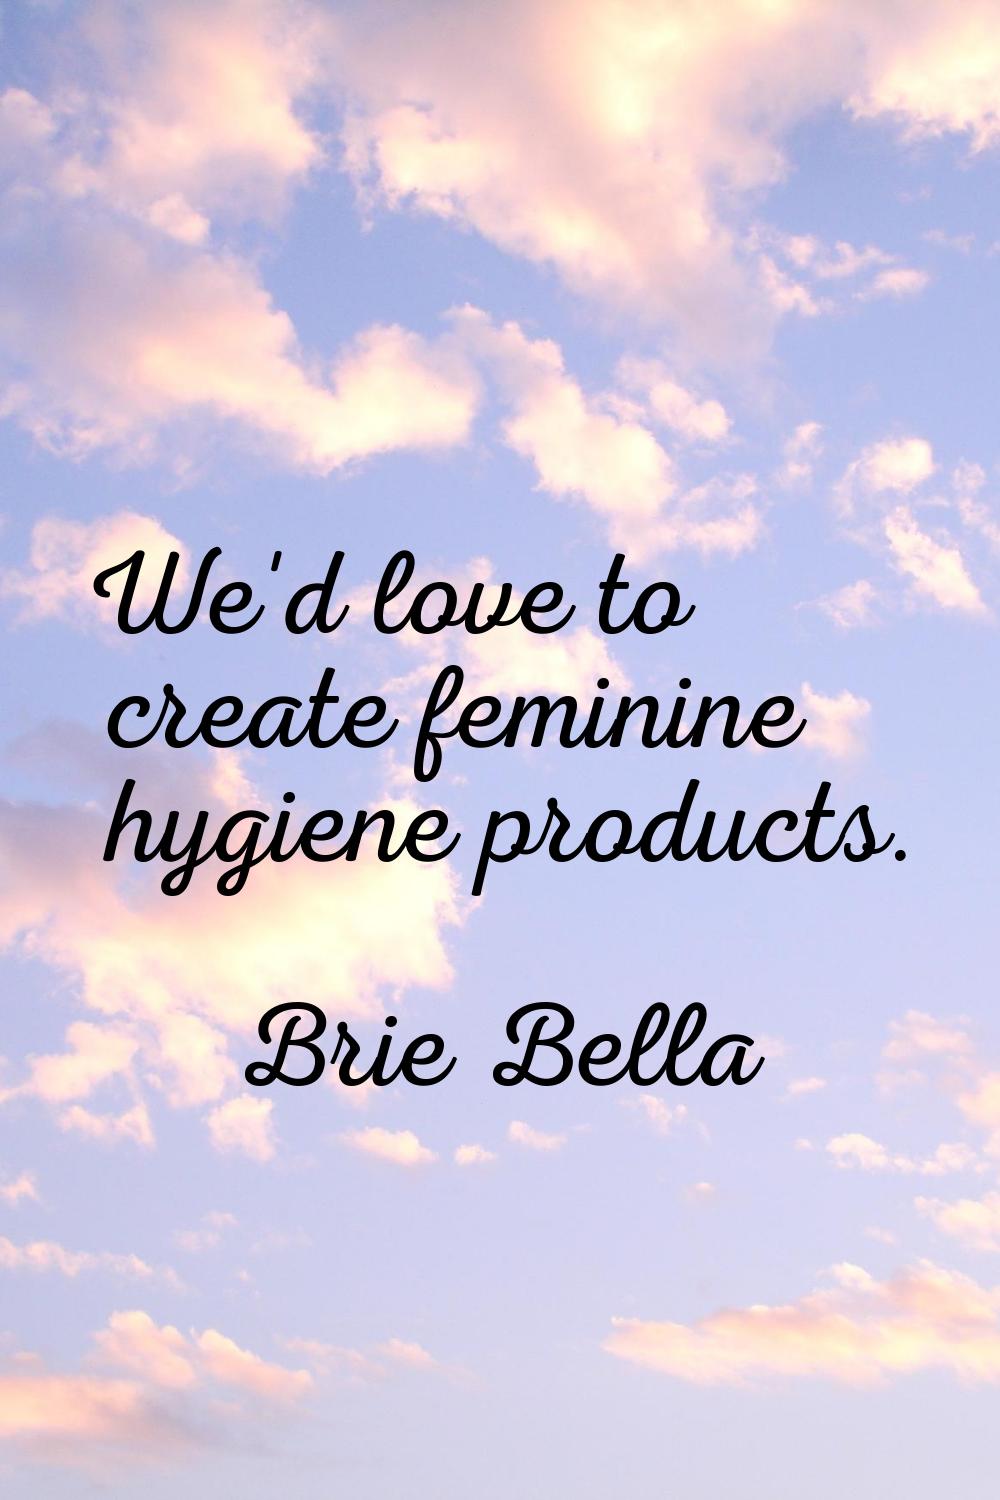 We'd love to create feminine hygiene products.